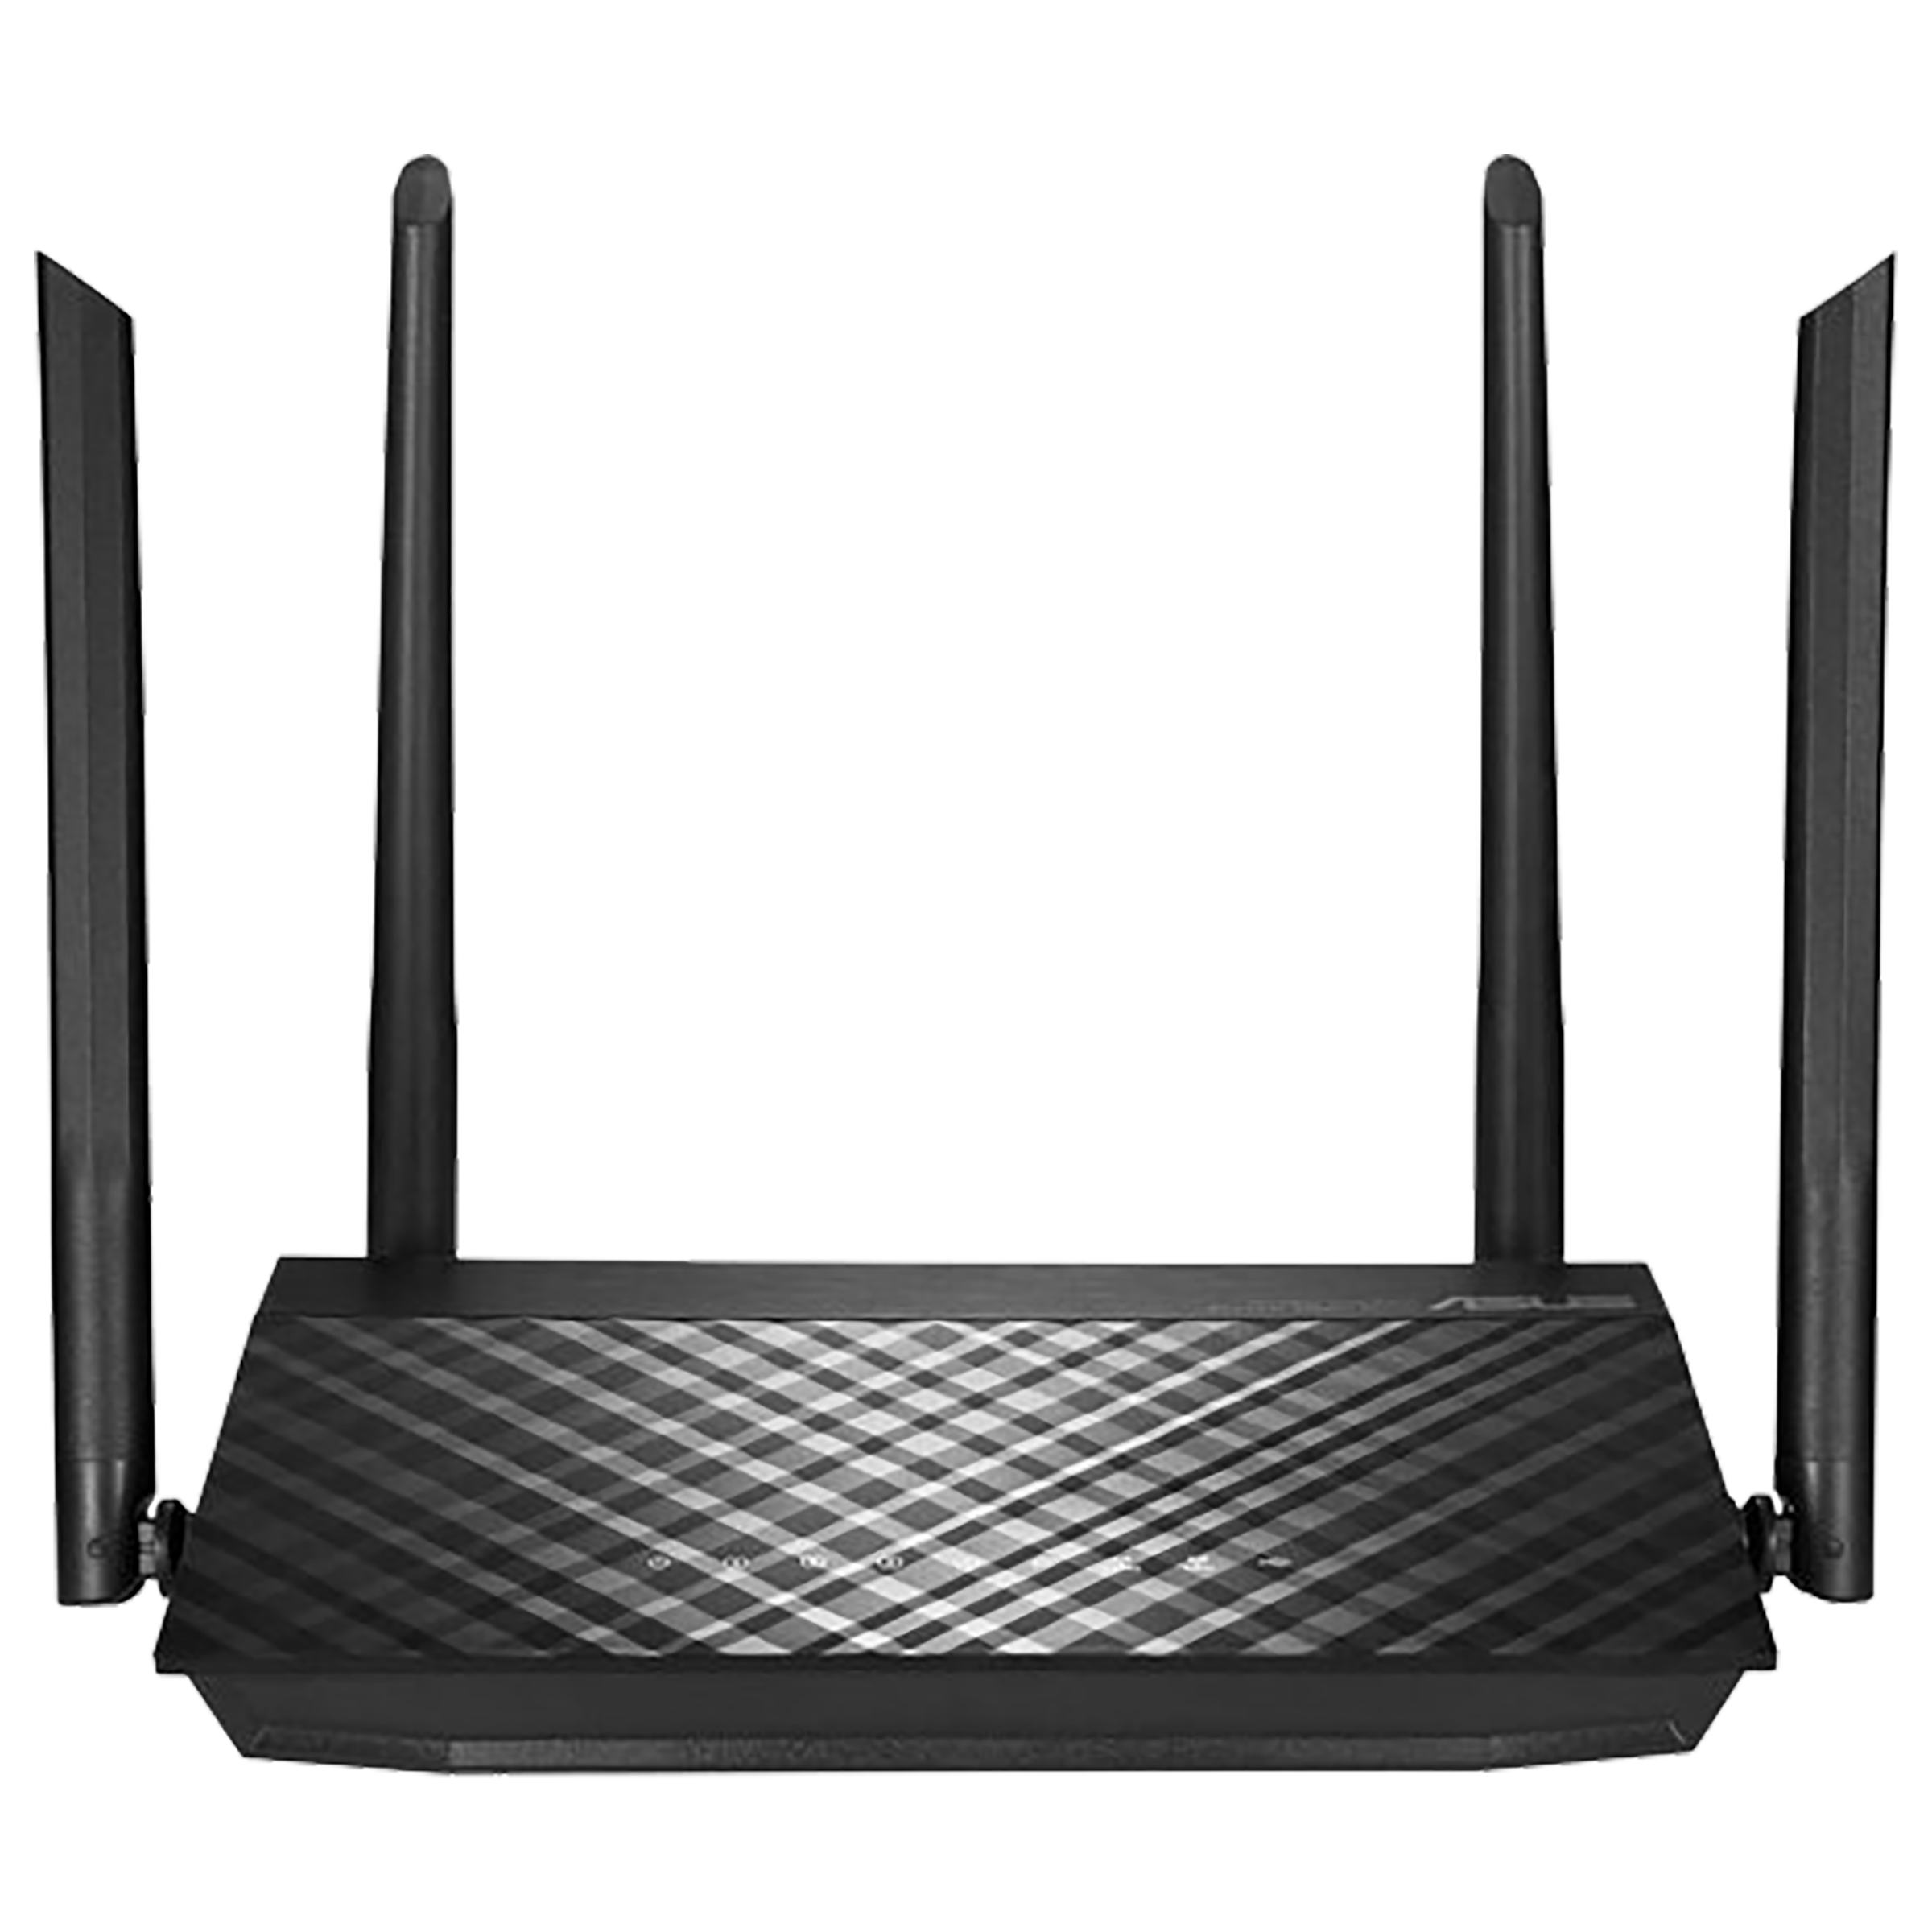 Asus Dual Band 867 Mbps Wi-Fi Router (4 Antennas, Traffic Analyzer, RT-AC59U V2, Black)_1